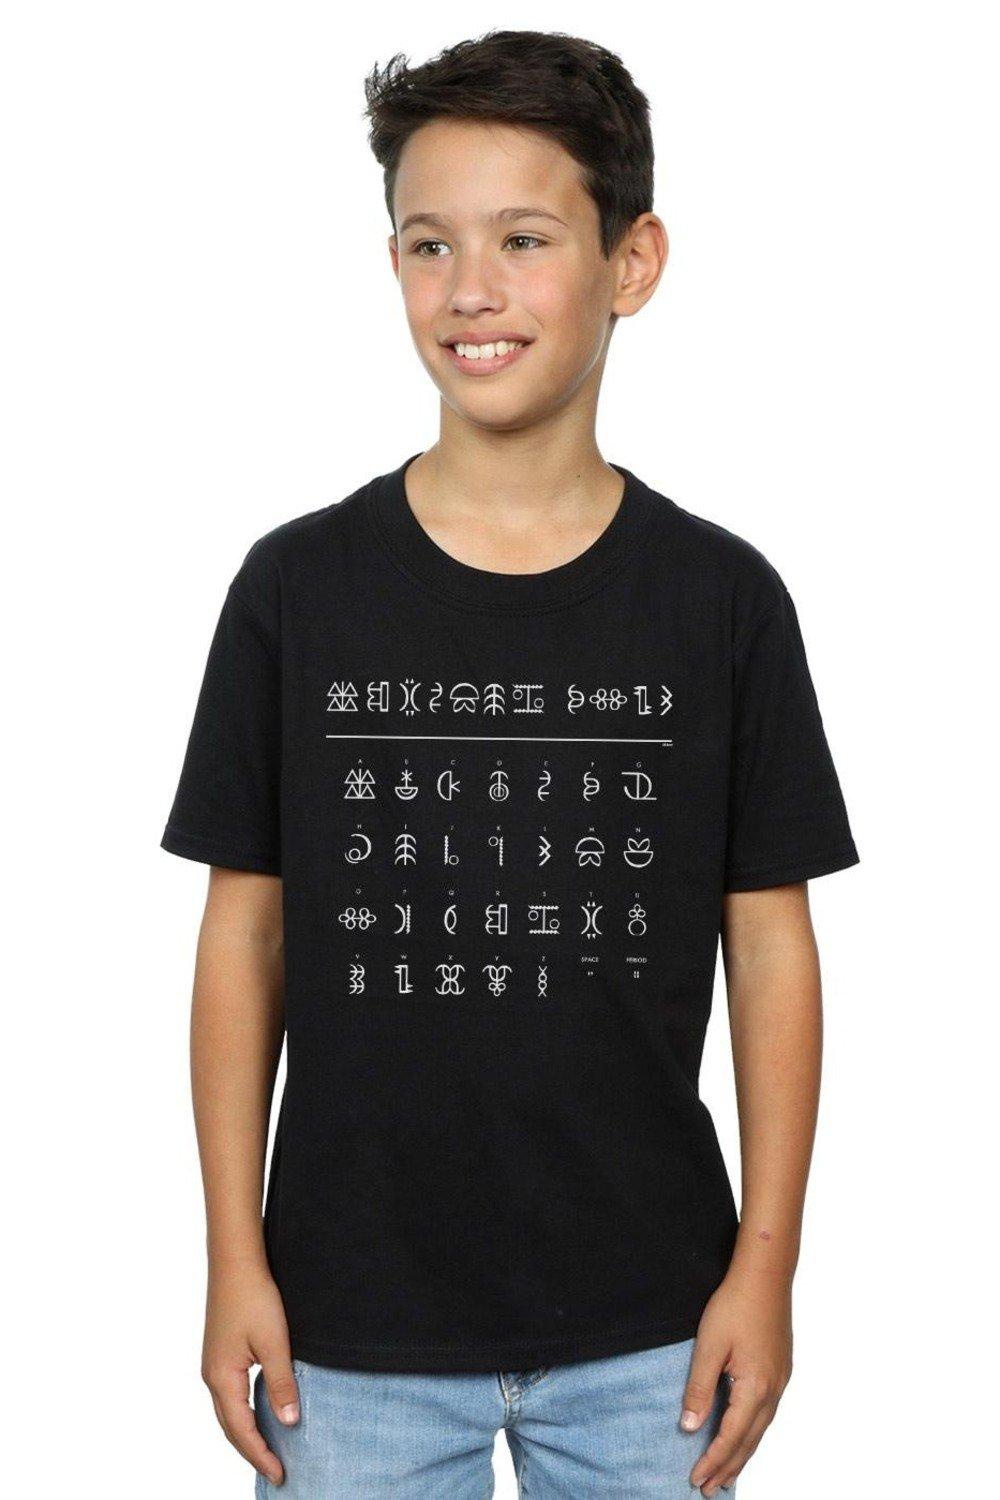 Artemis Fowl Gnommish Alphabet T-Shirt